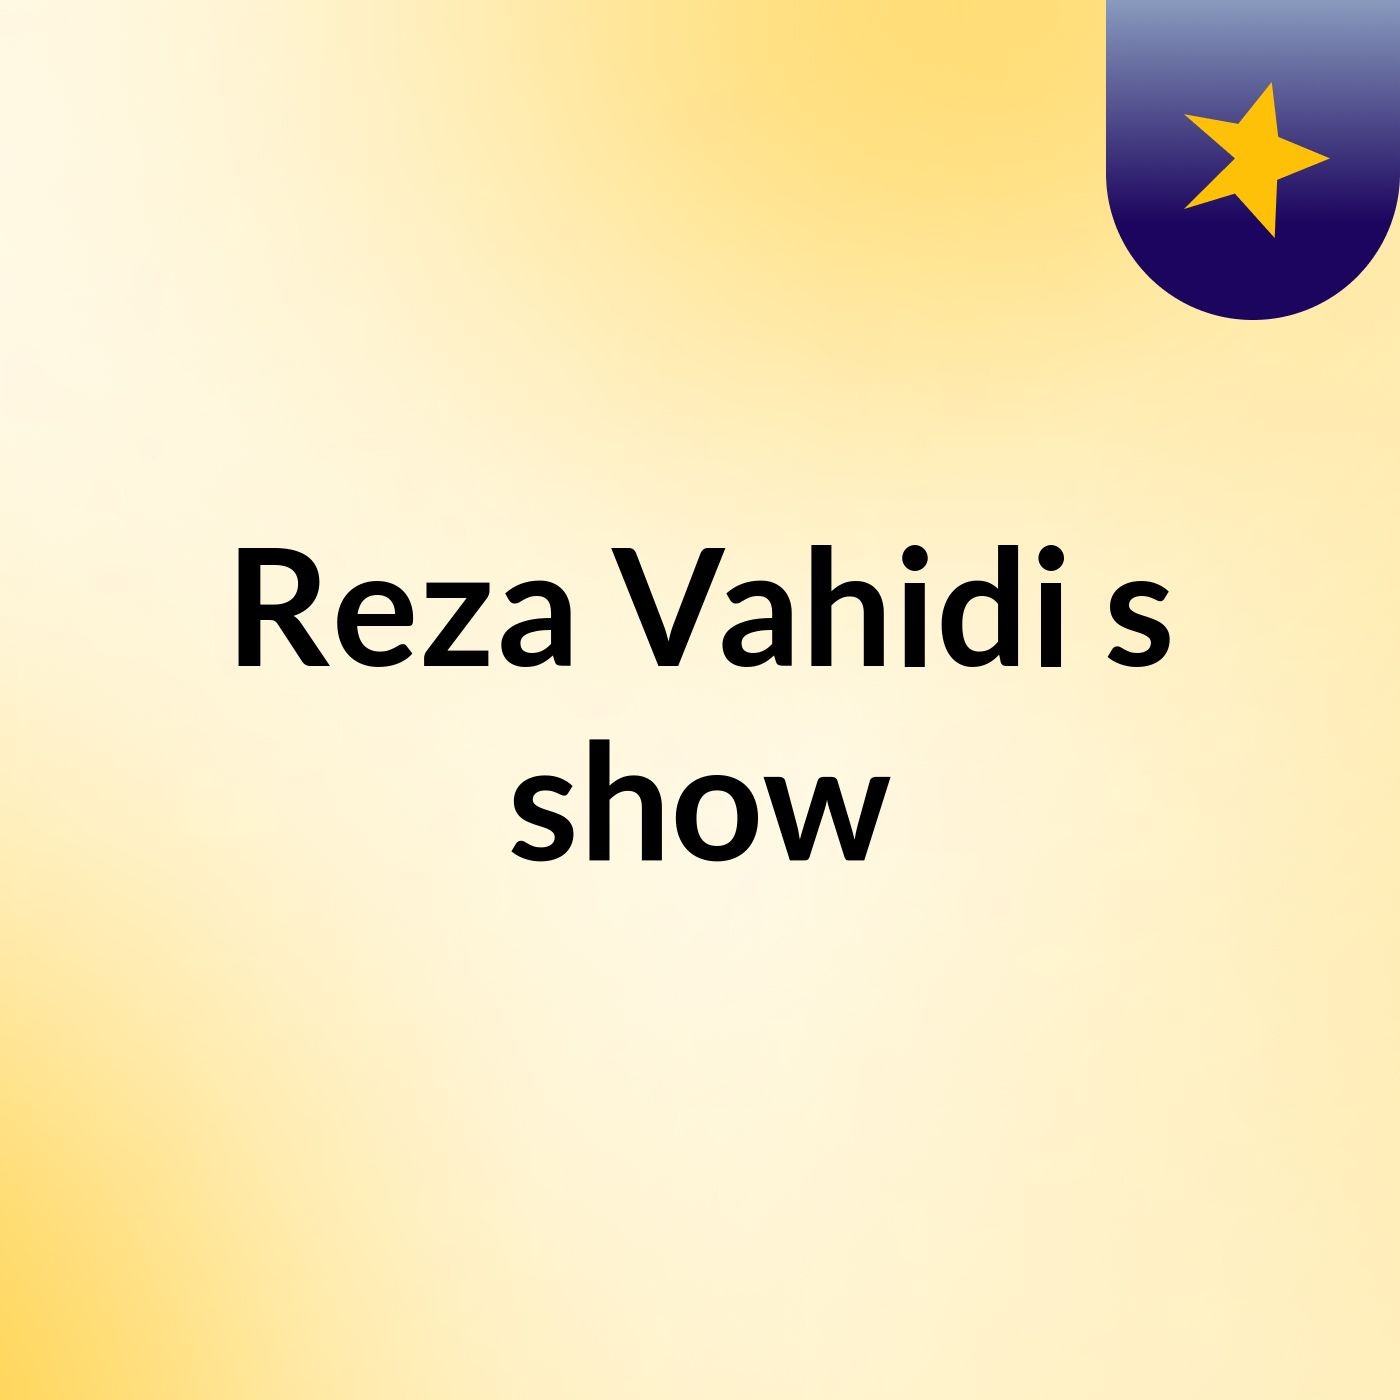 Reza Vahidi's show